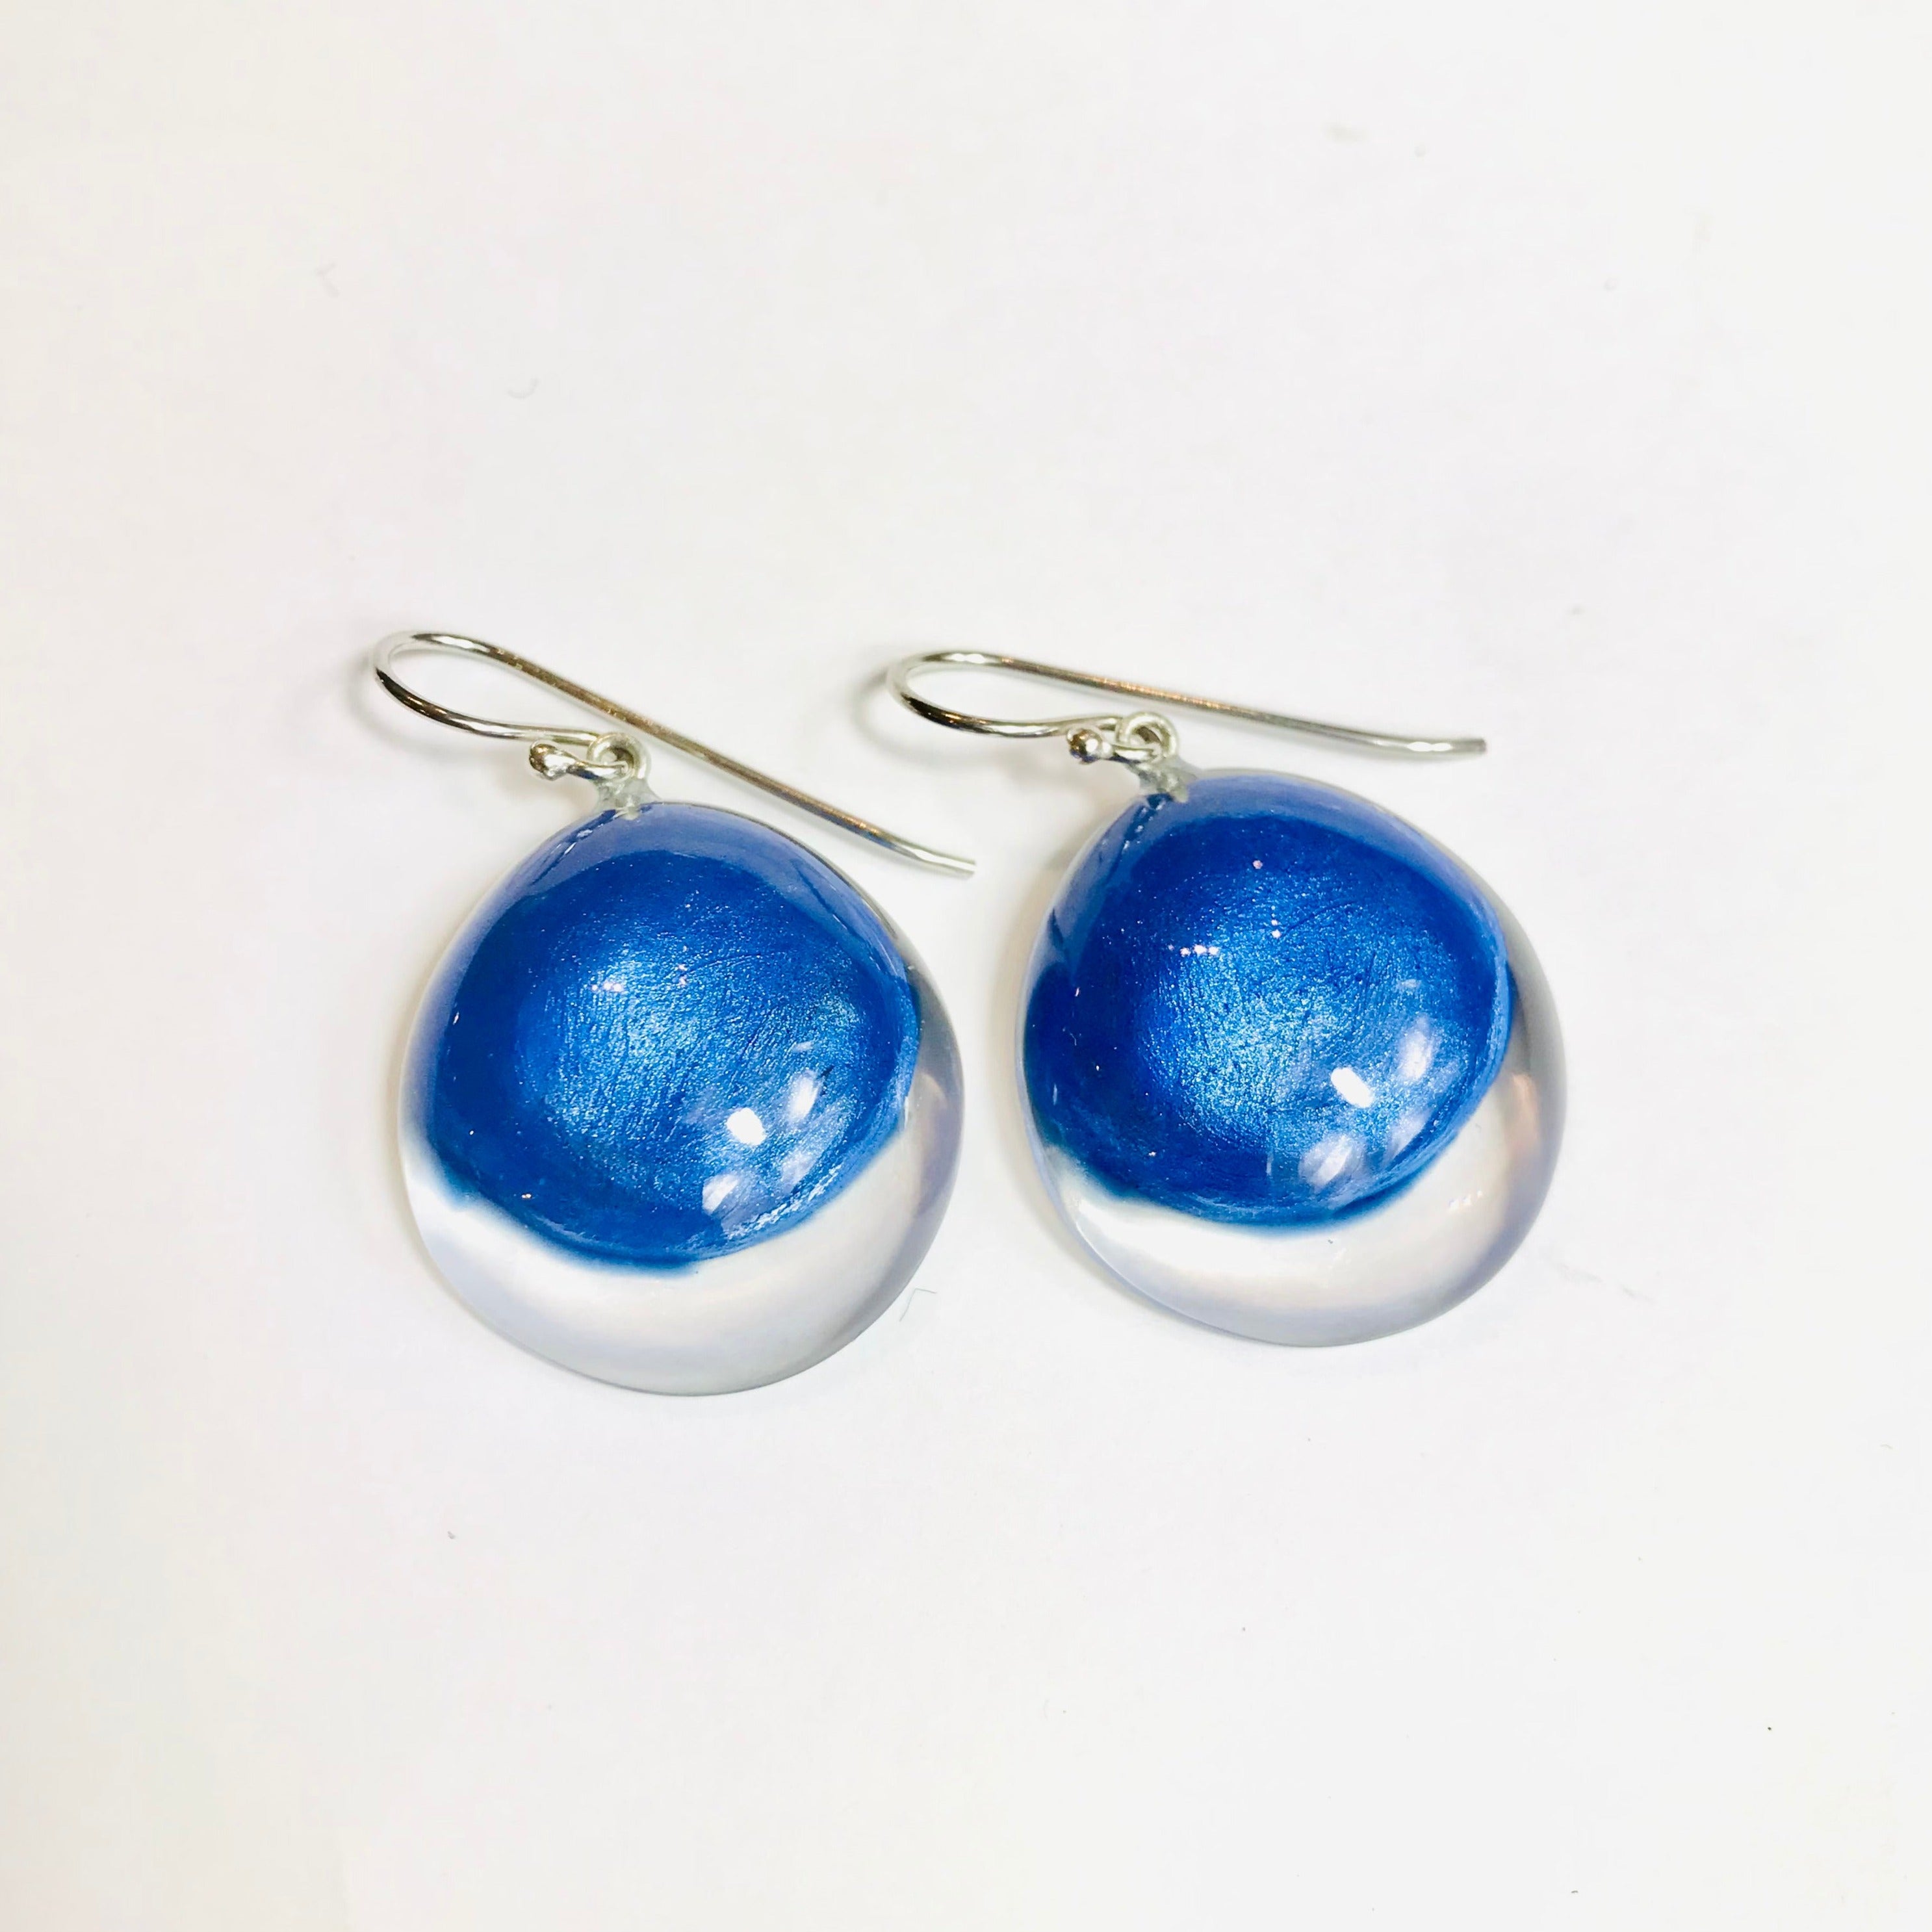 Blue Luxus Earrings - The Nancy Smillie Shop - Art, Jewellery & Designer Gifts Glasgow